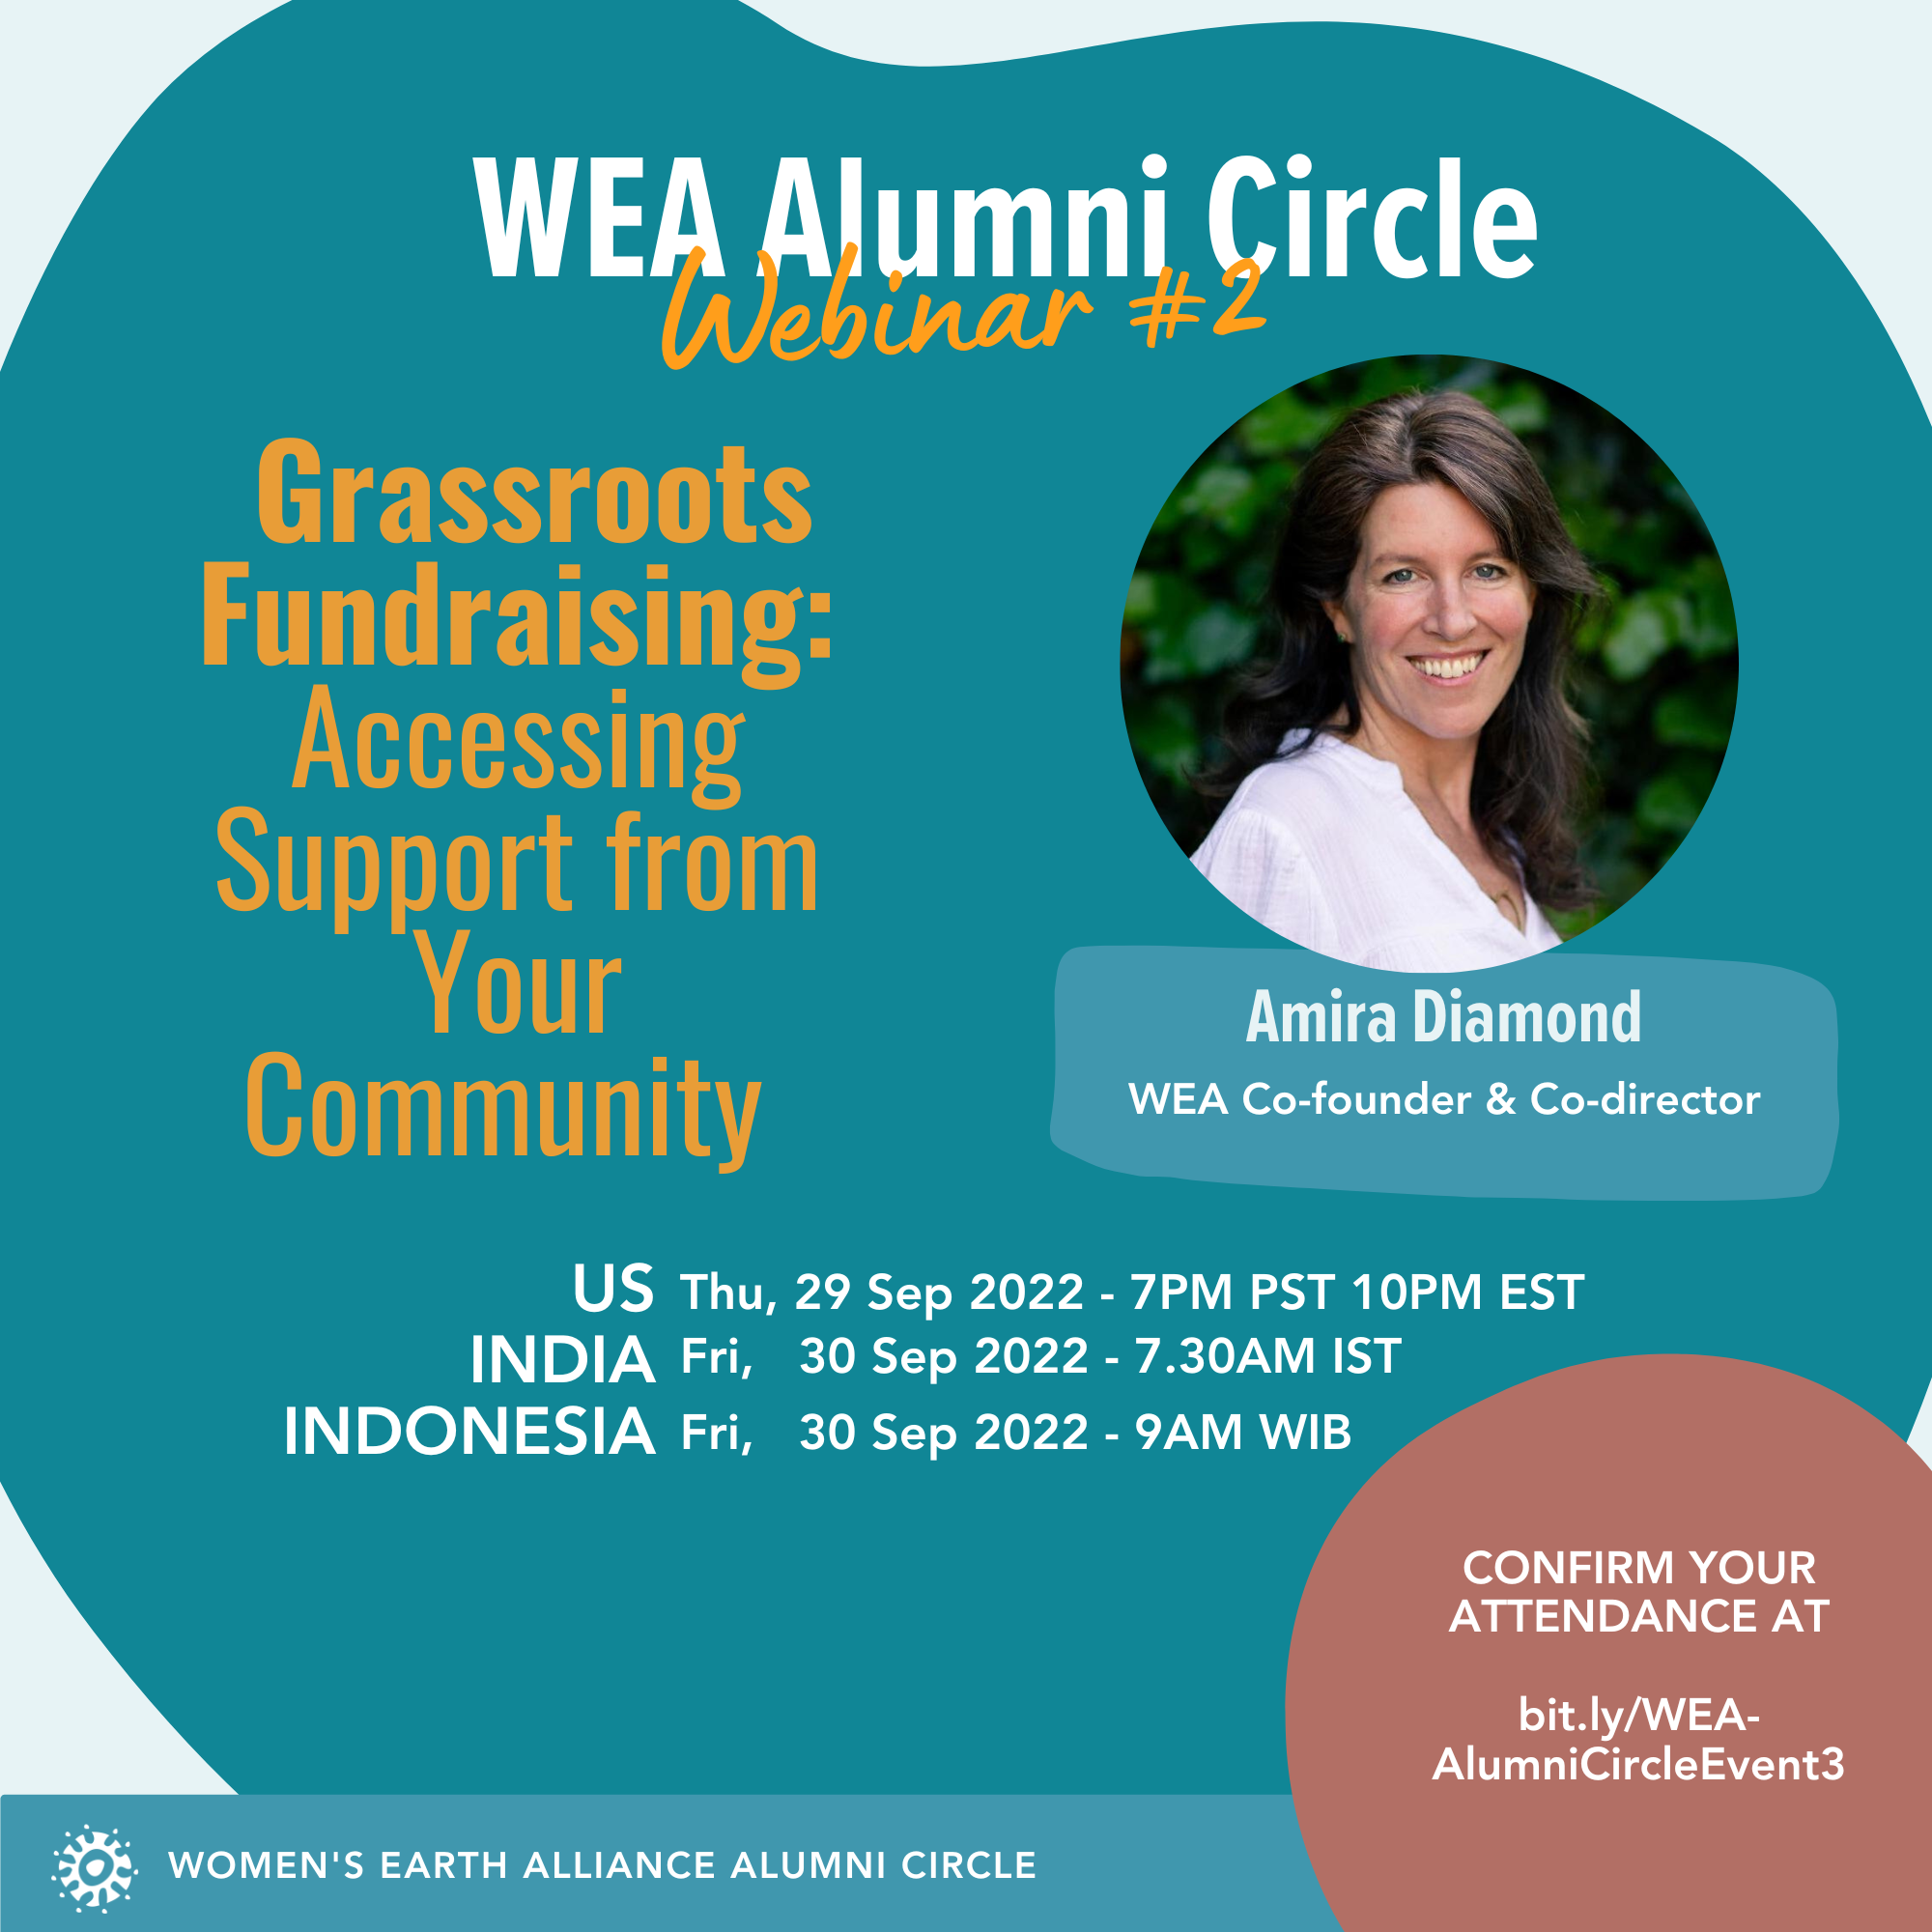 WEA Alumni Circle #3 Fundraising Topic